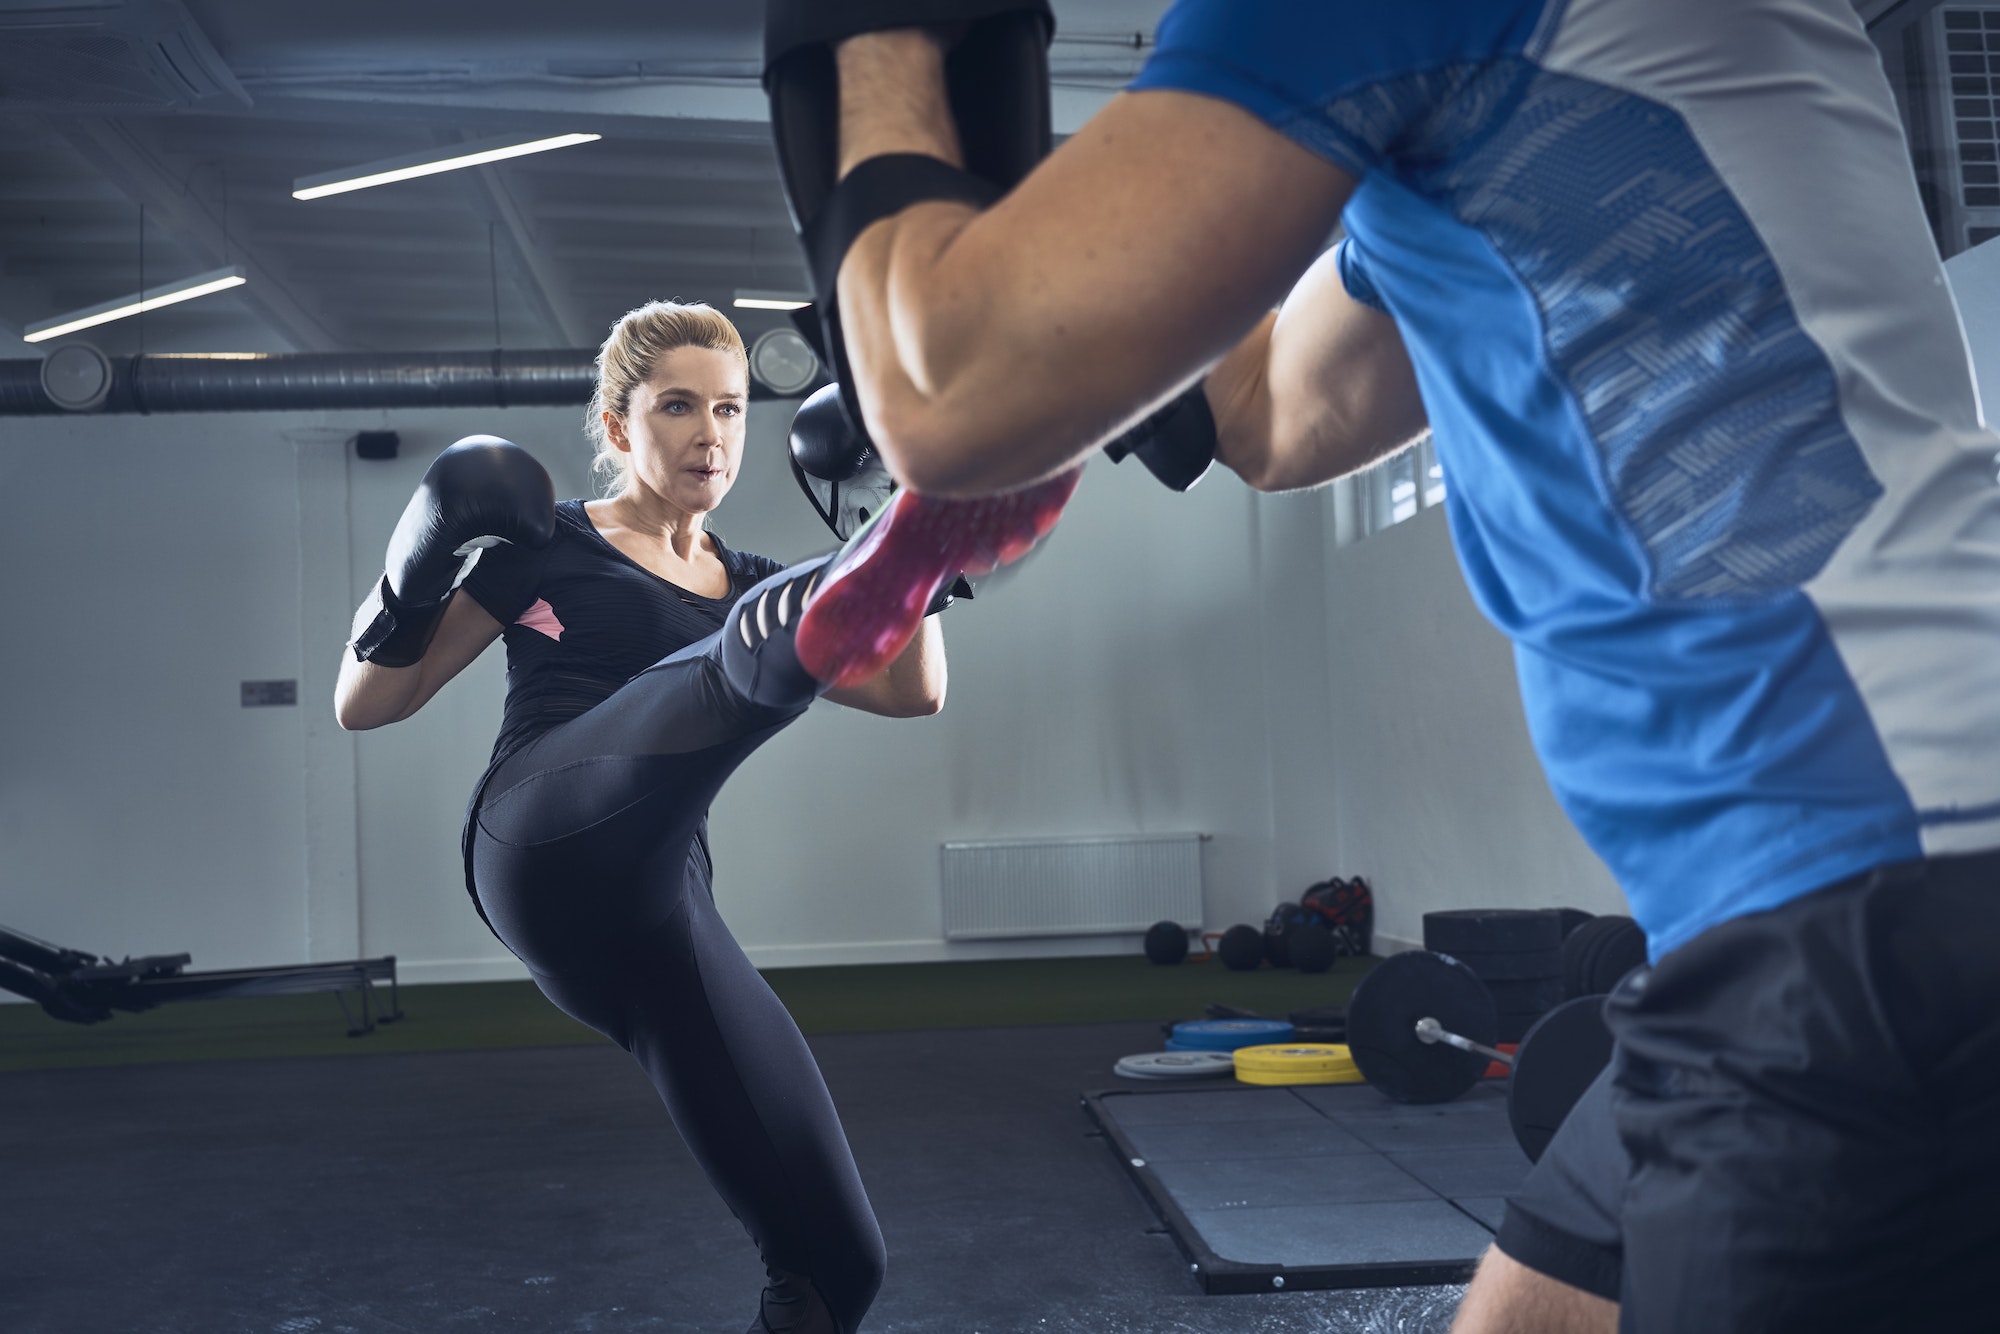 Woman practicing kickboxing at gym